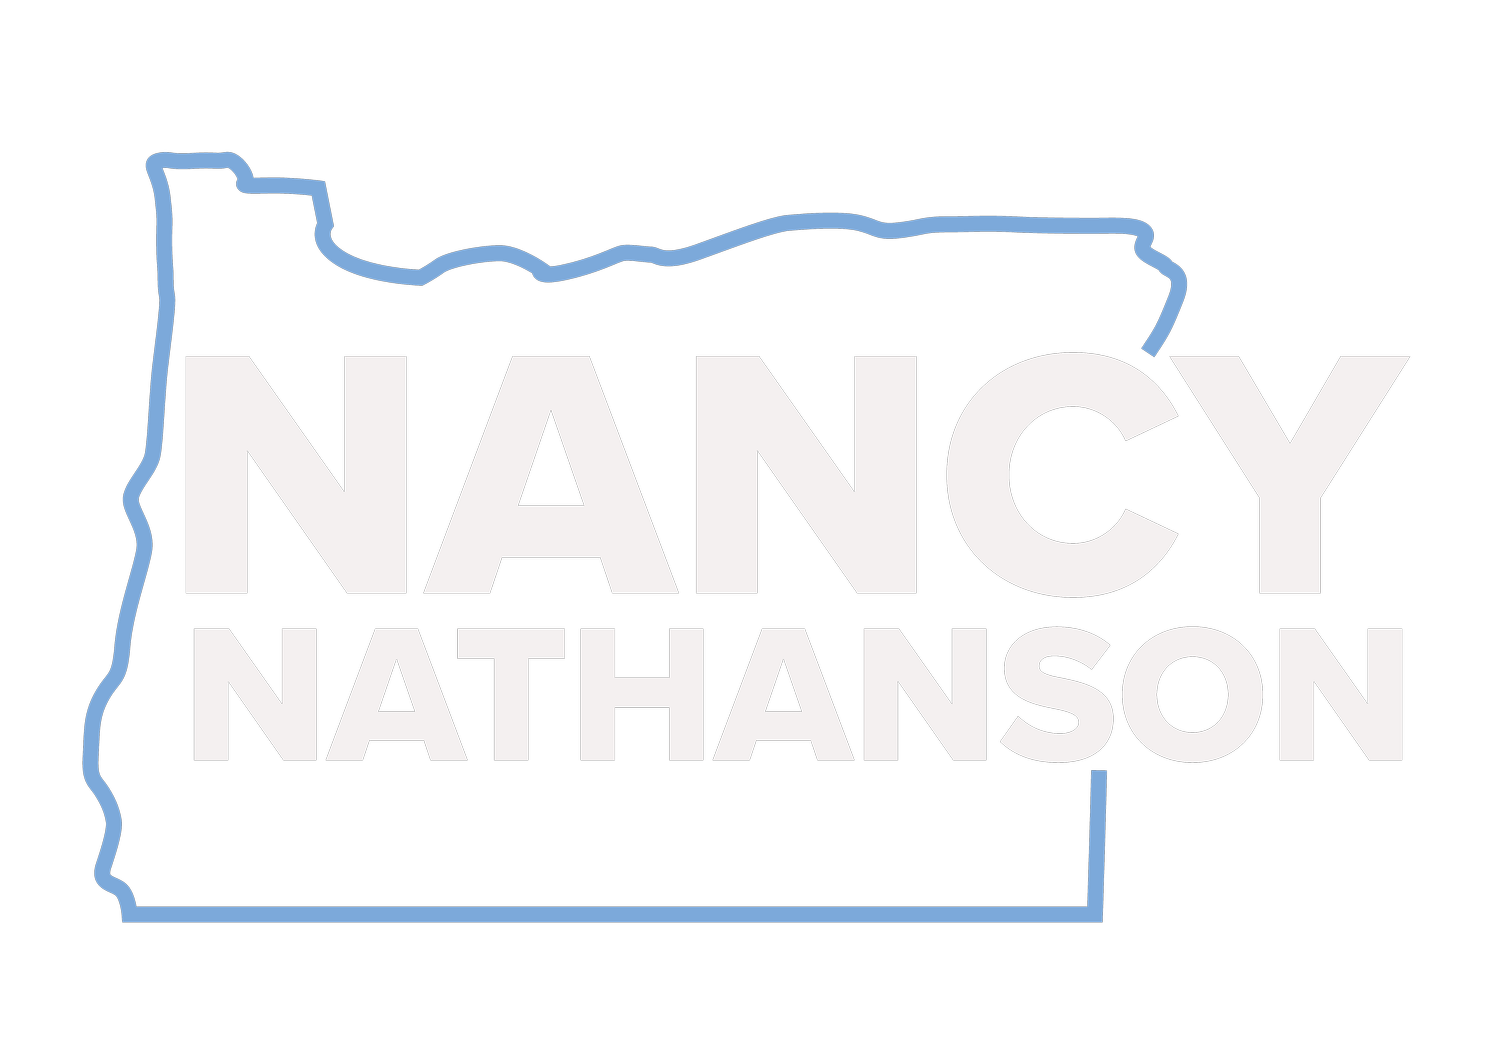 Rep. Nancy Nathanson